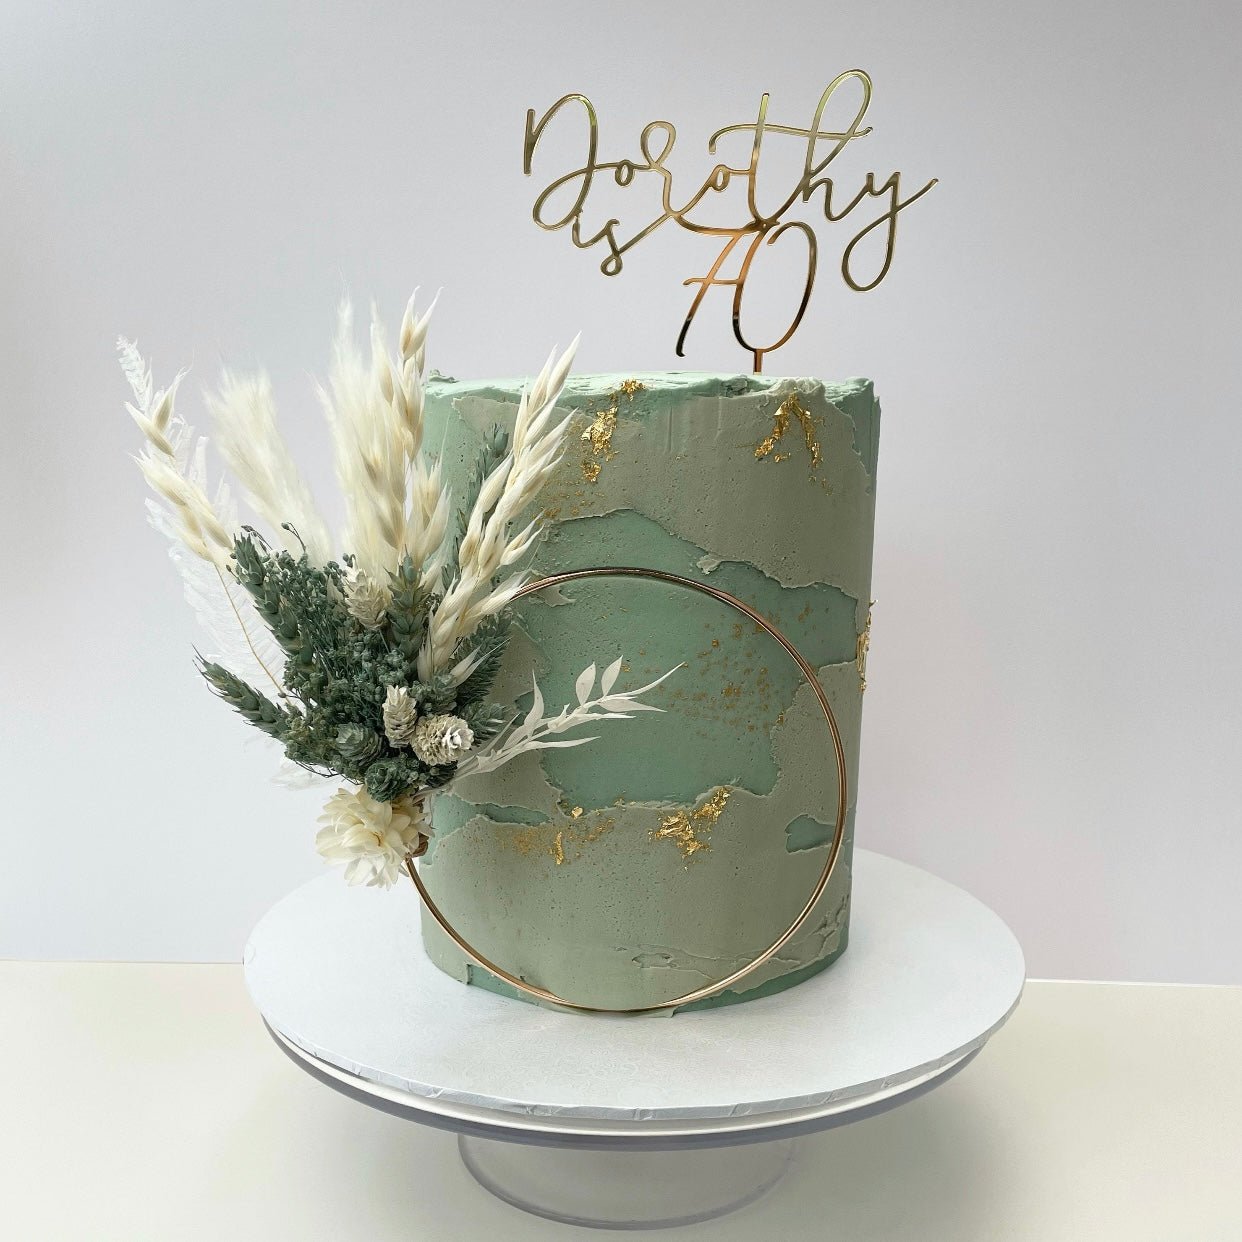 Personalised Birthday Cake Topper - Cake Topper